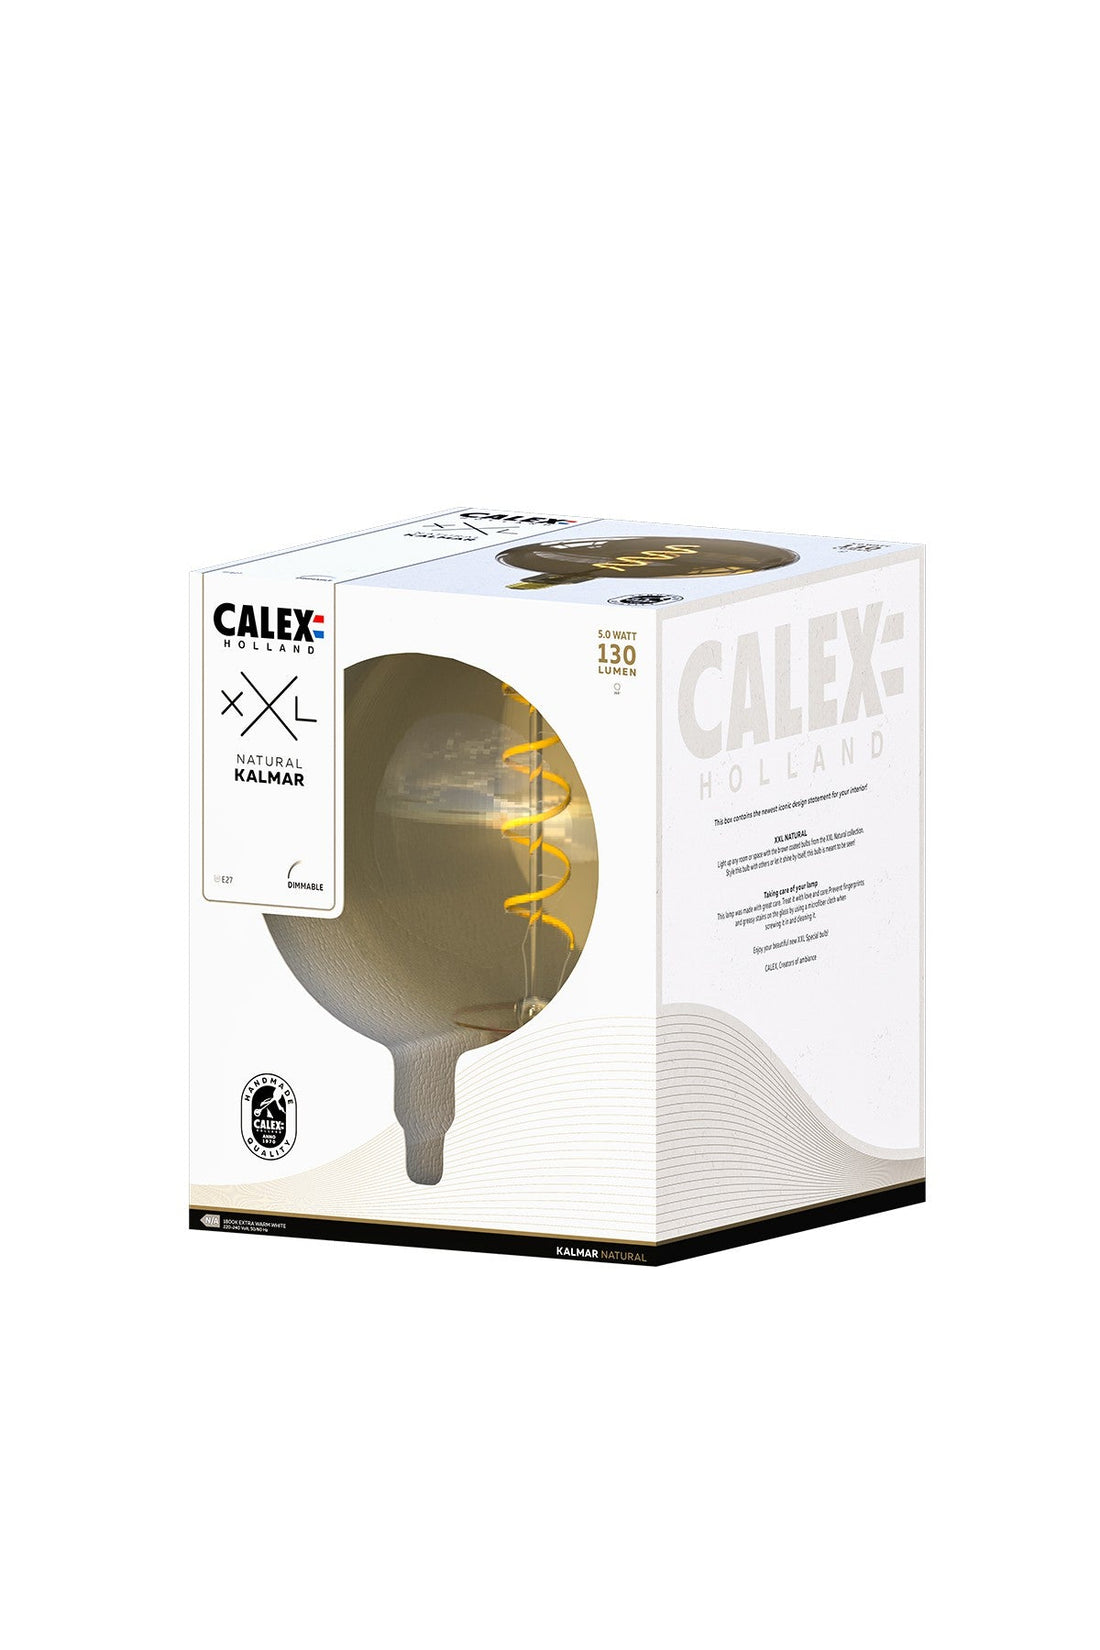 Calex XXL Kalmar Natural Spiraal filament 220-240V 5W 130lm 1800K E27 - Calex